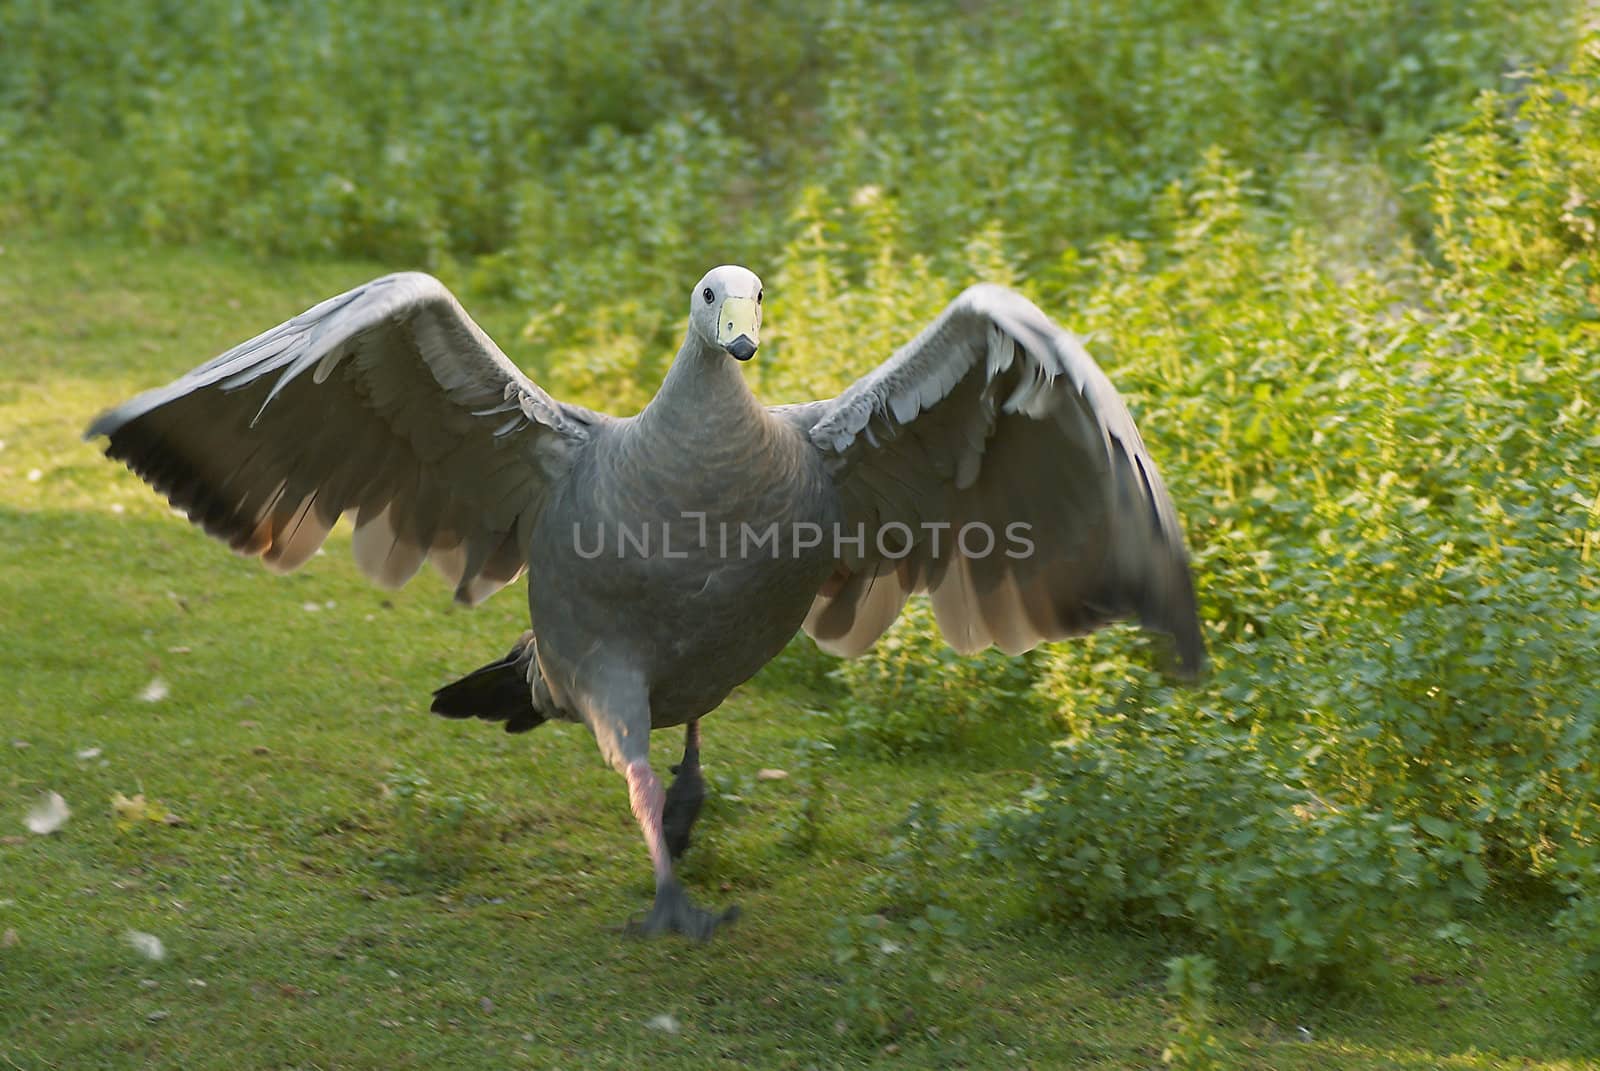 Attacking goose
Cape Barren Goose (Cereopsis novaehollandiae)